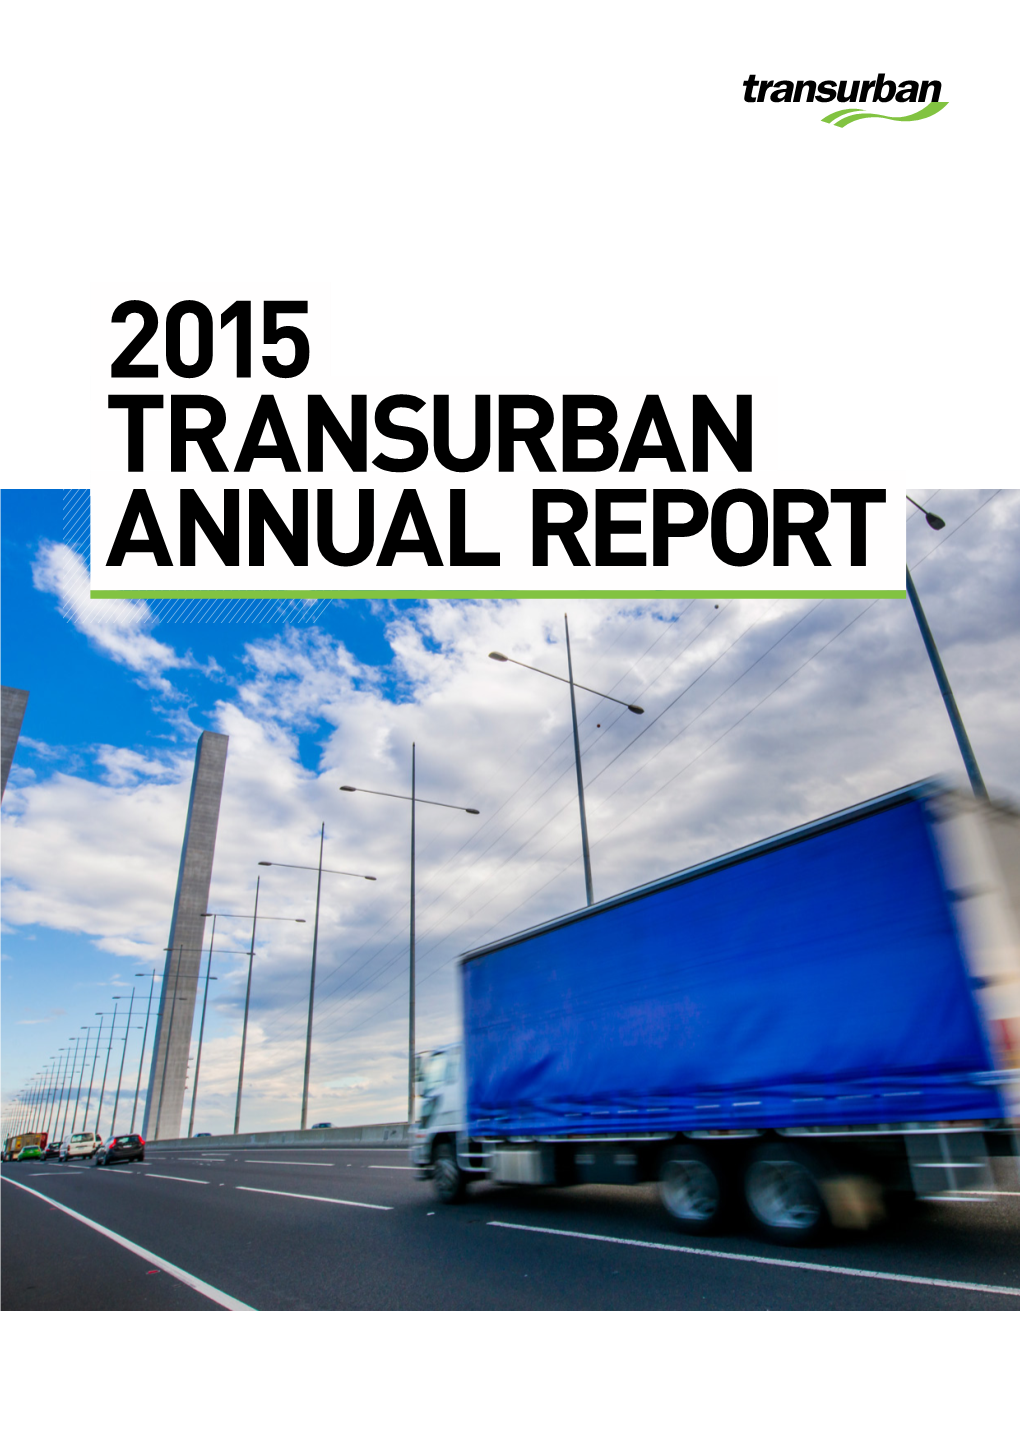 2015 Transurban Annual Report Contents